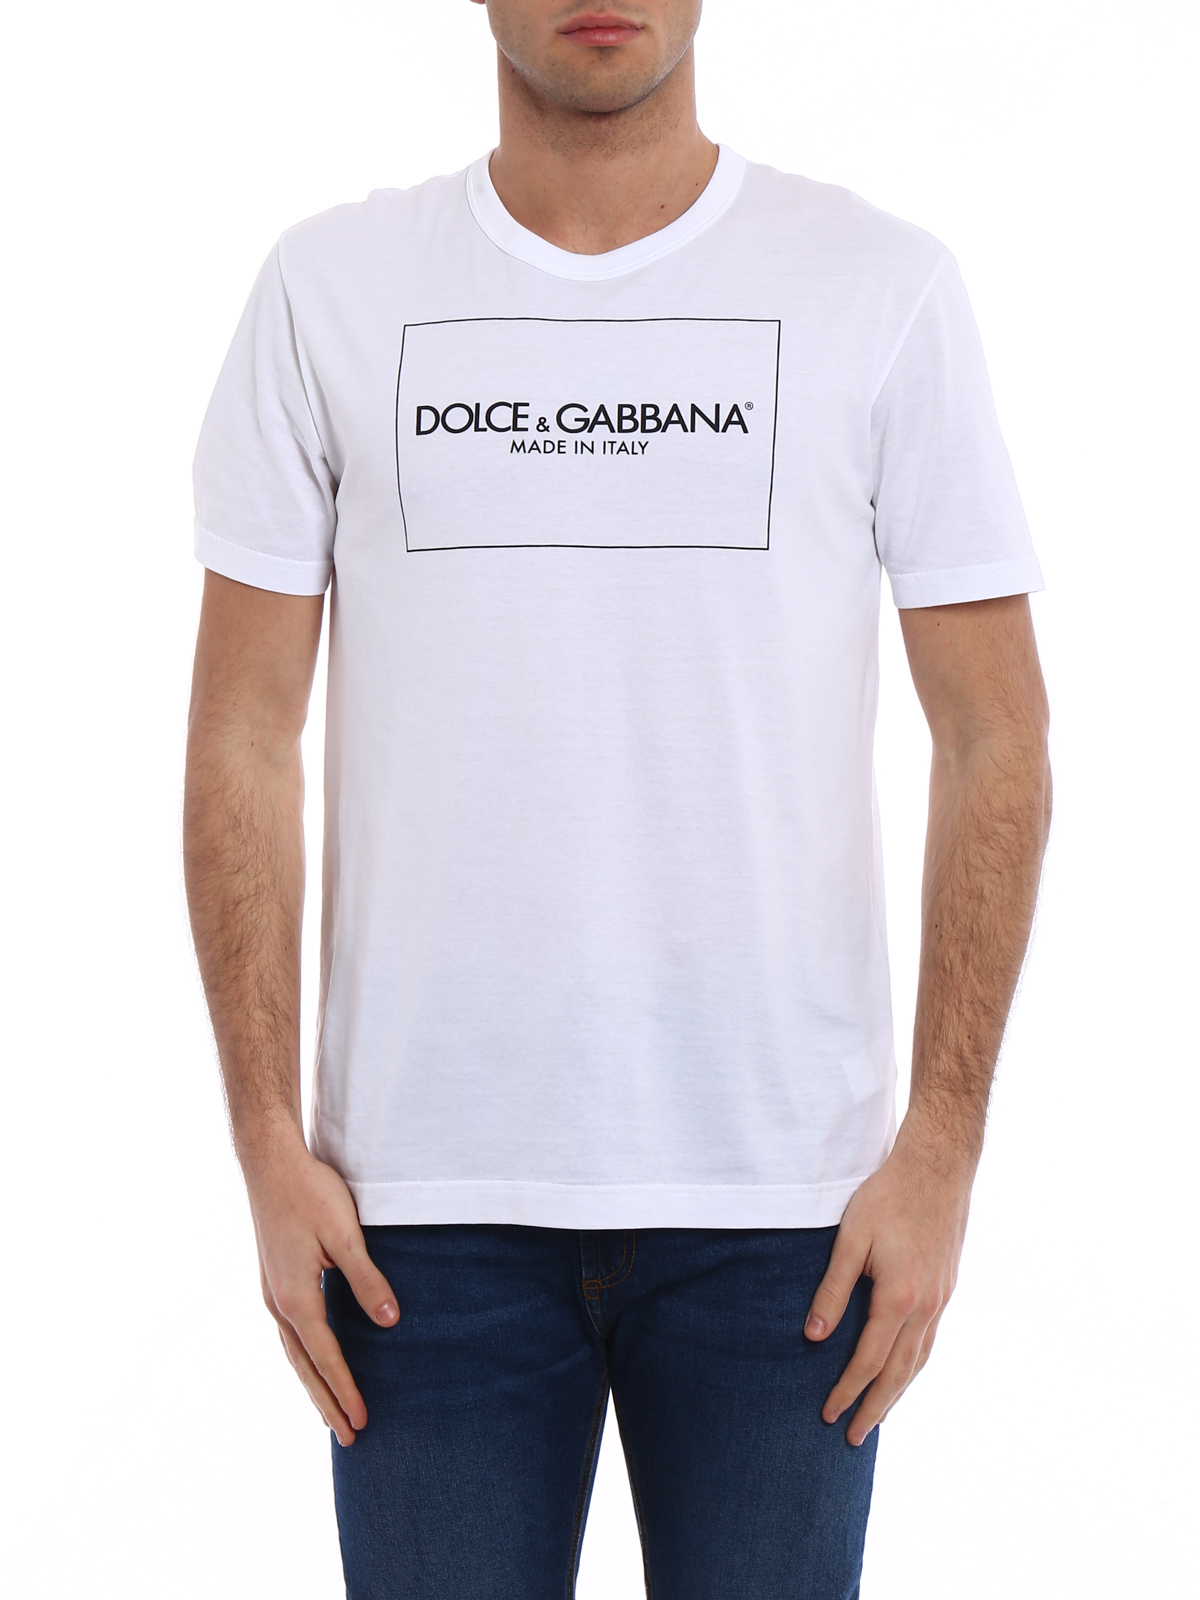 Shirts Dolce & Gabbana - D&G Made in Italy cotton T-shirt - G8IA8TFH7EDHWL94